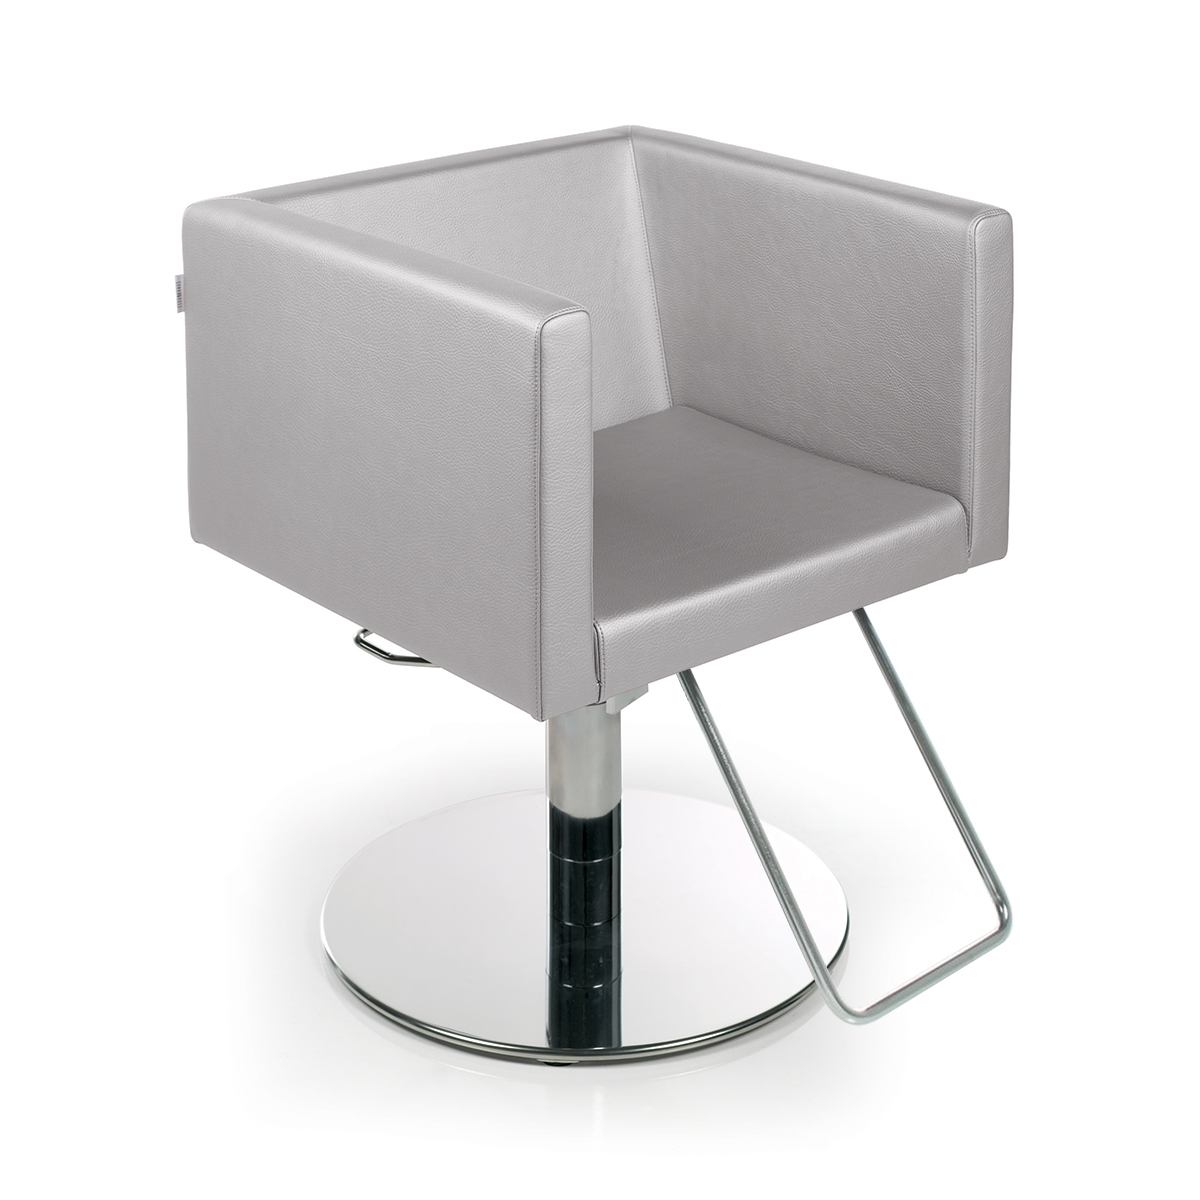 Kubika Roto Styling Chair by Gamma & Bross Spa